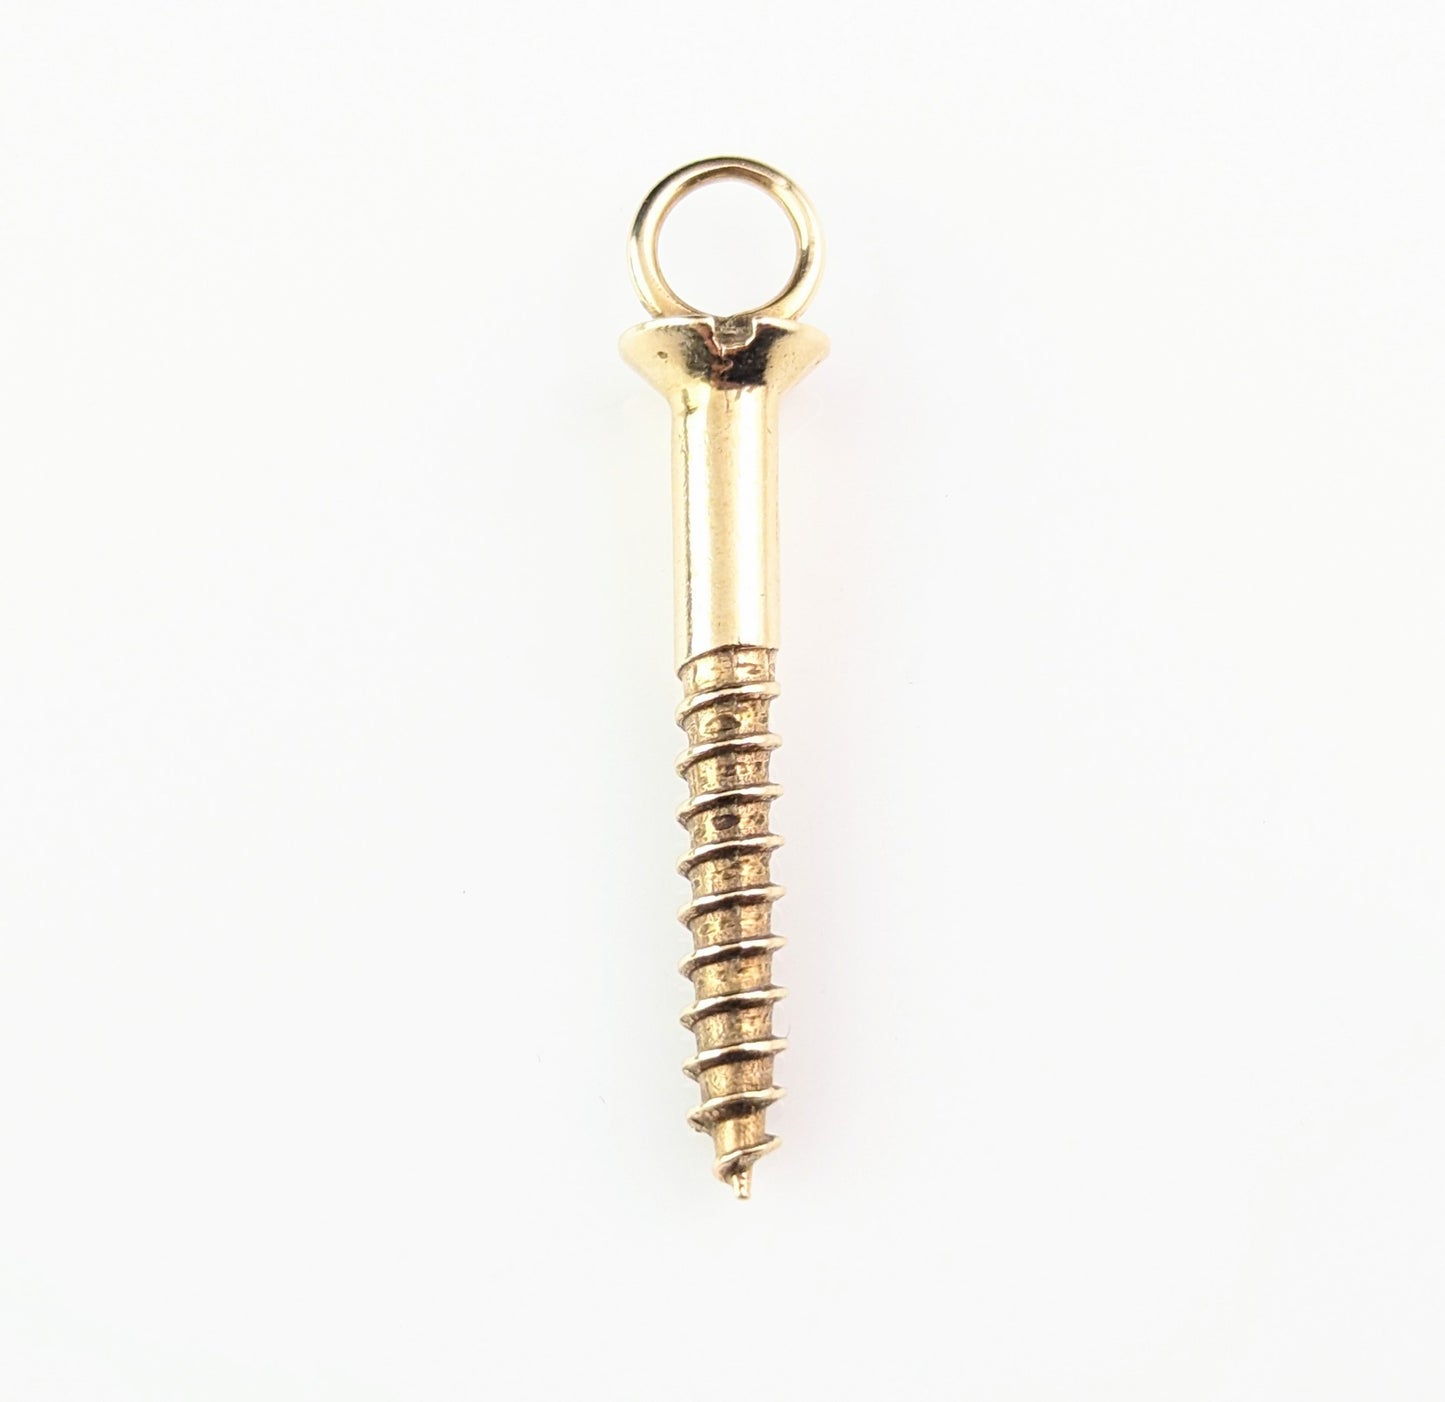 Vintage 9ct yellow gold screw pendant, mid century novelty